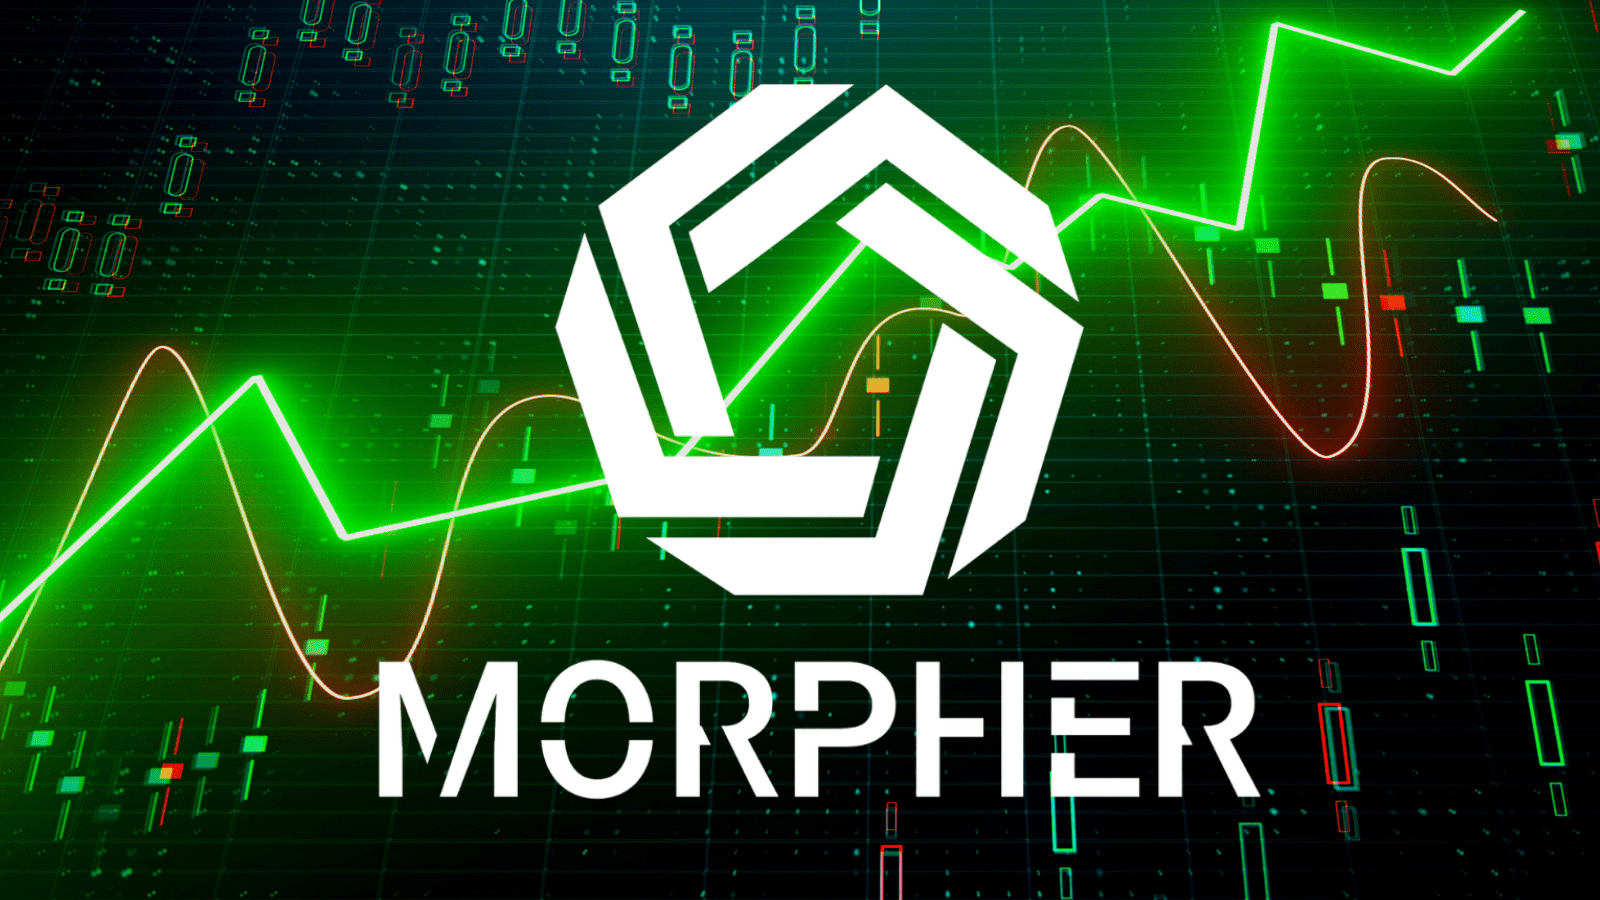 Morpher